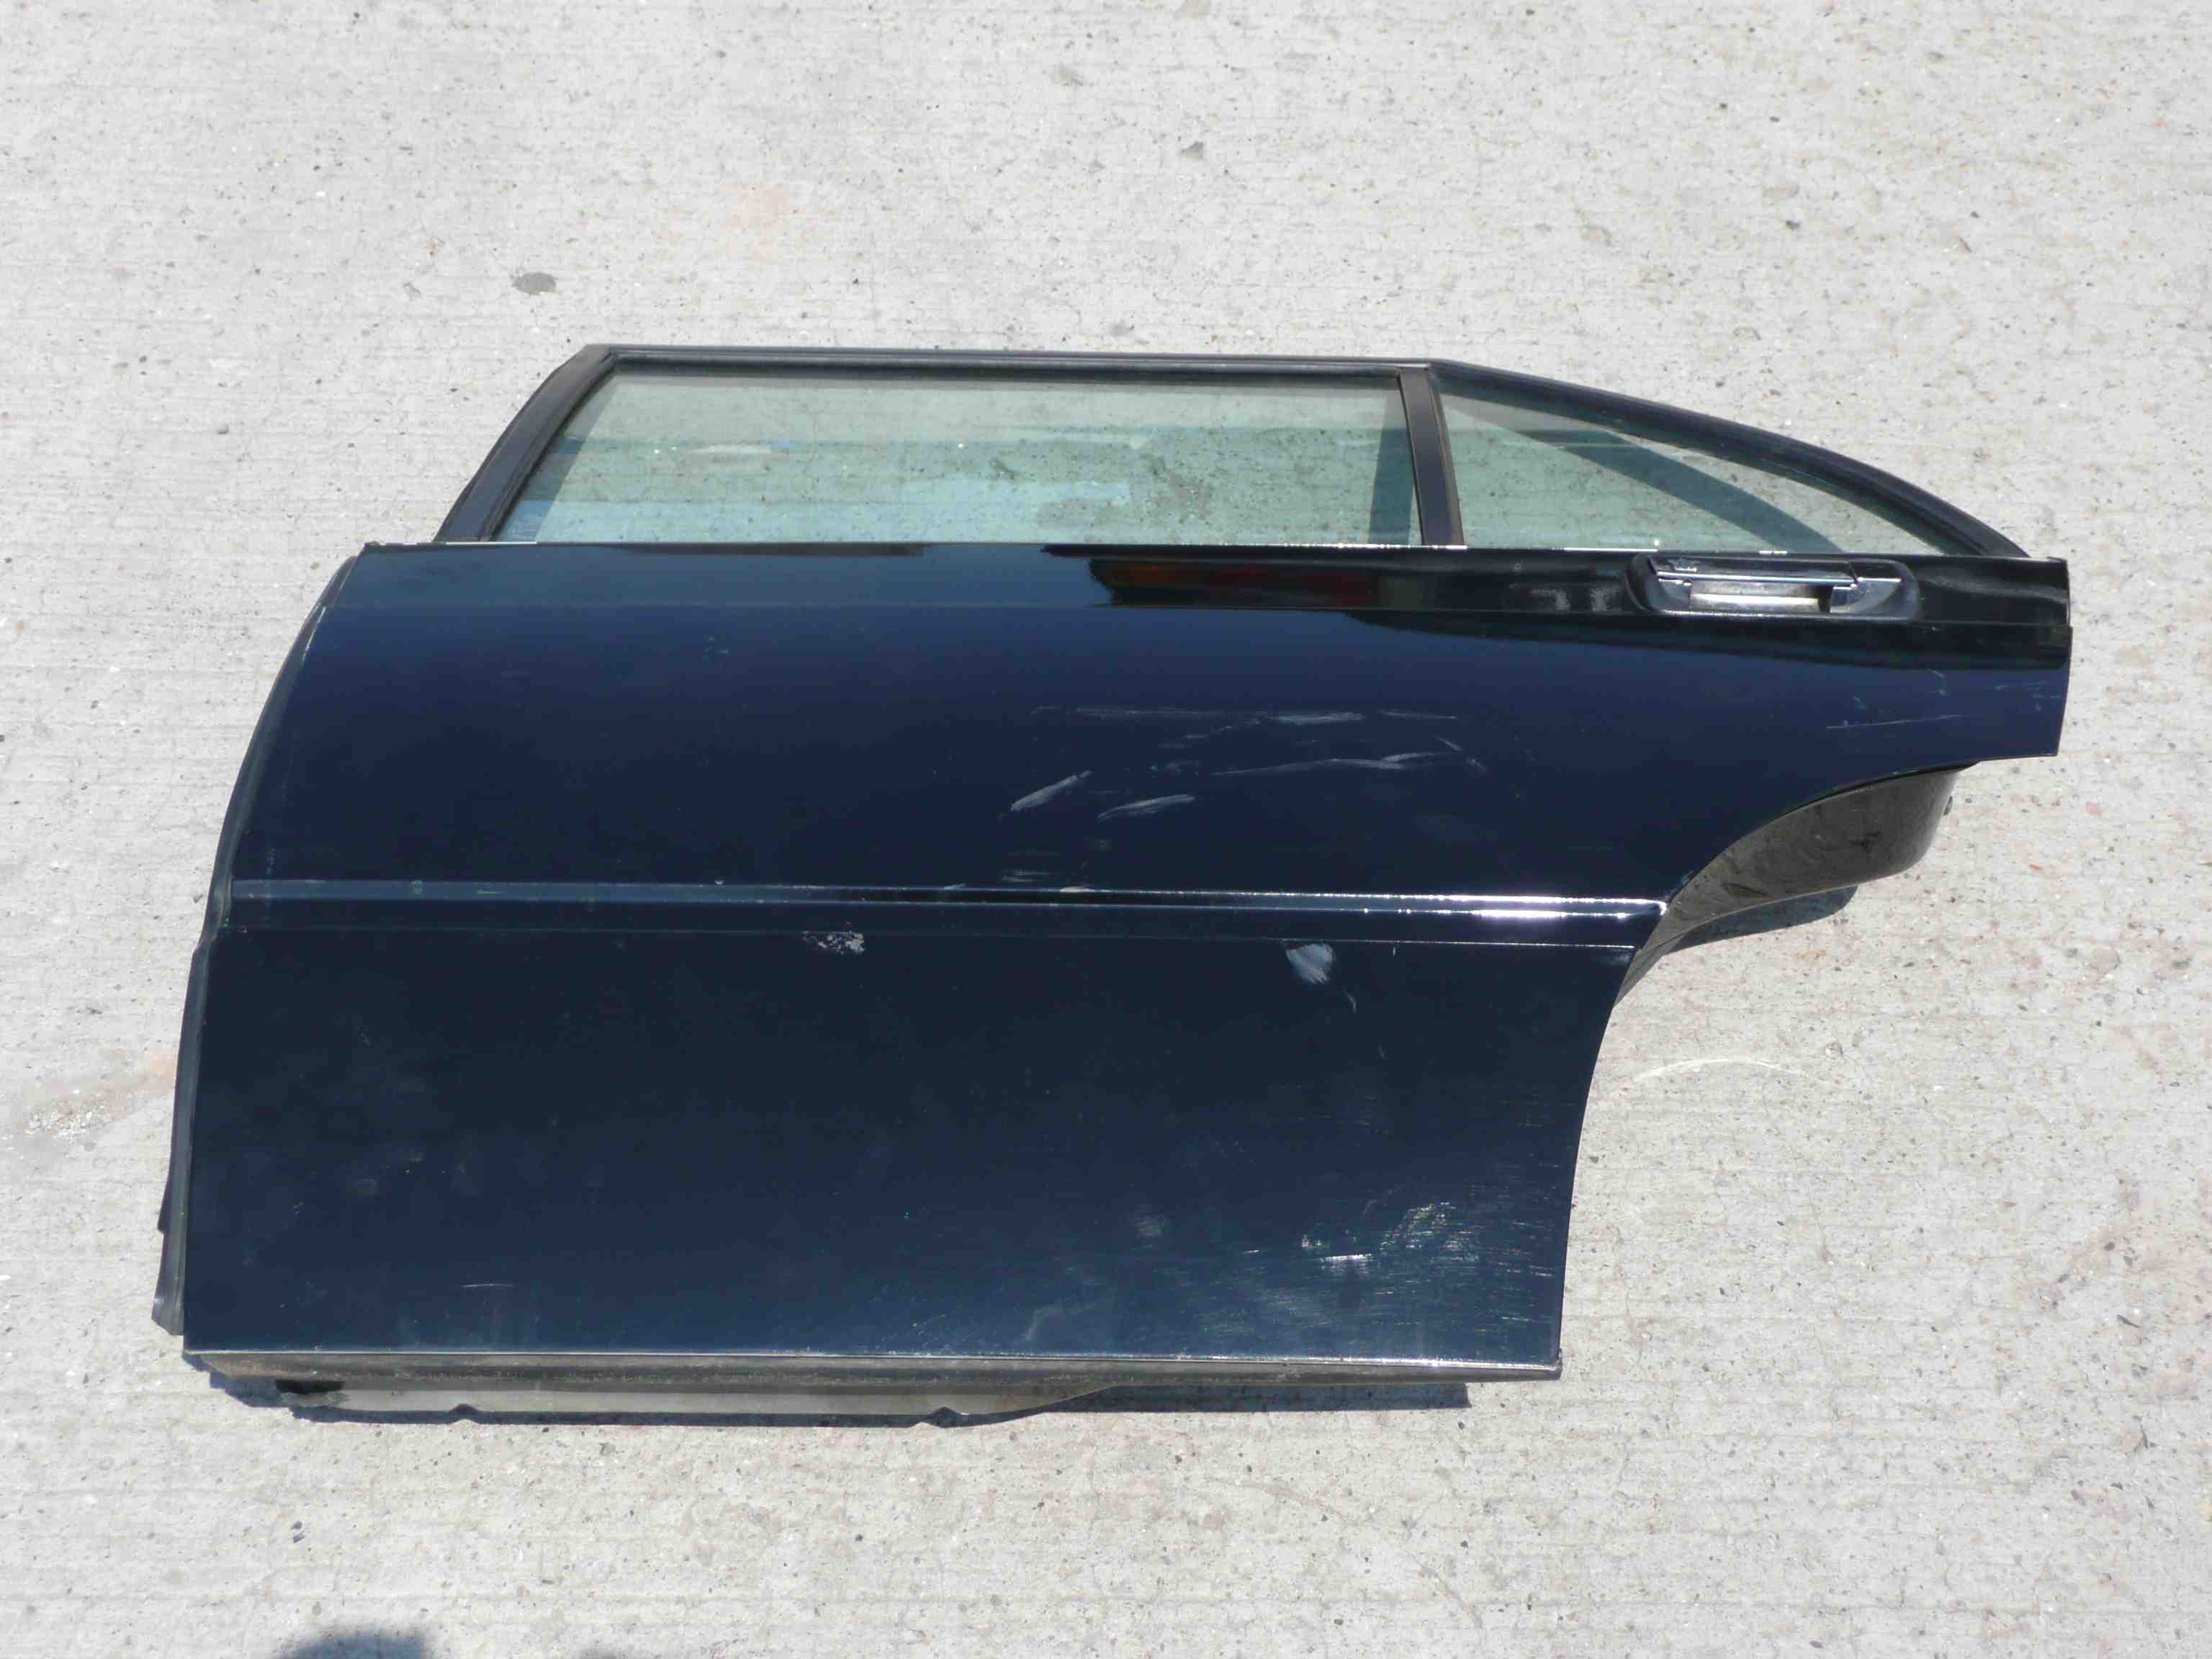 Used left rear door Maserati 418, 422, 424 or 430